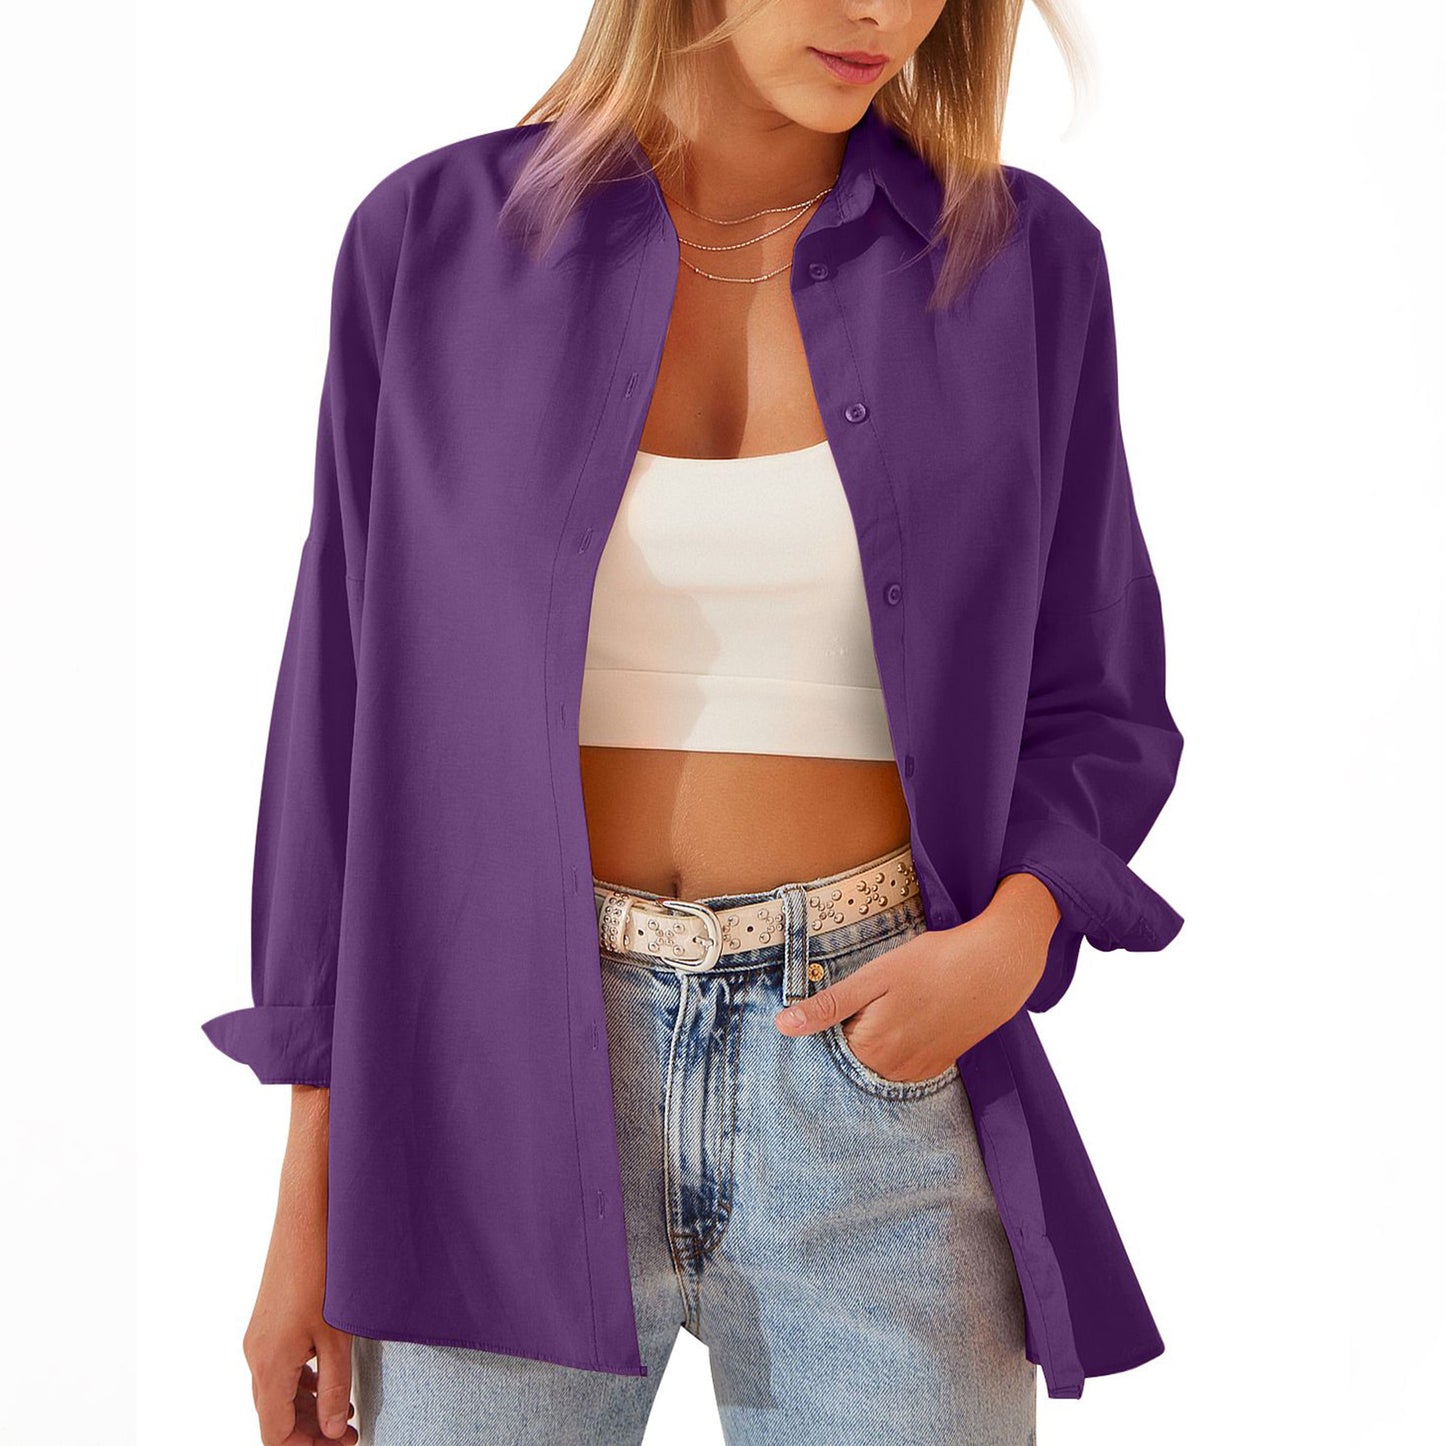 Women's Shirt Jacket Long Sleeve Blouse Button Down Tops Candy Color Shirt